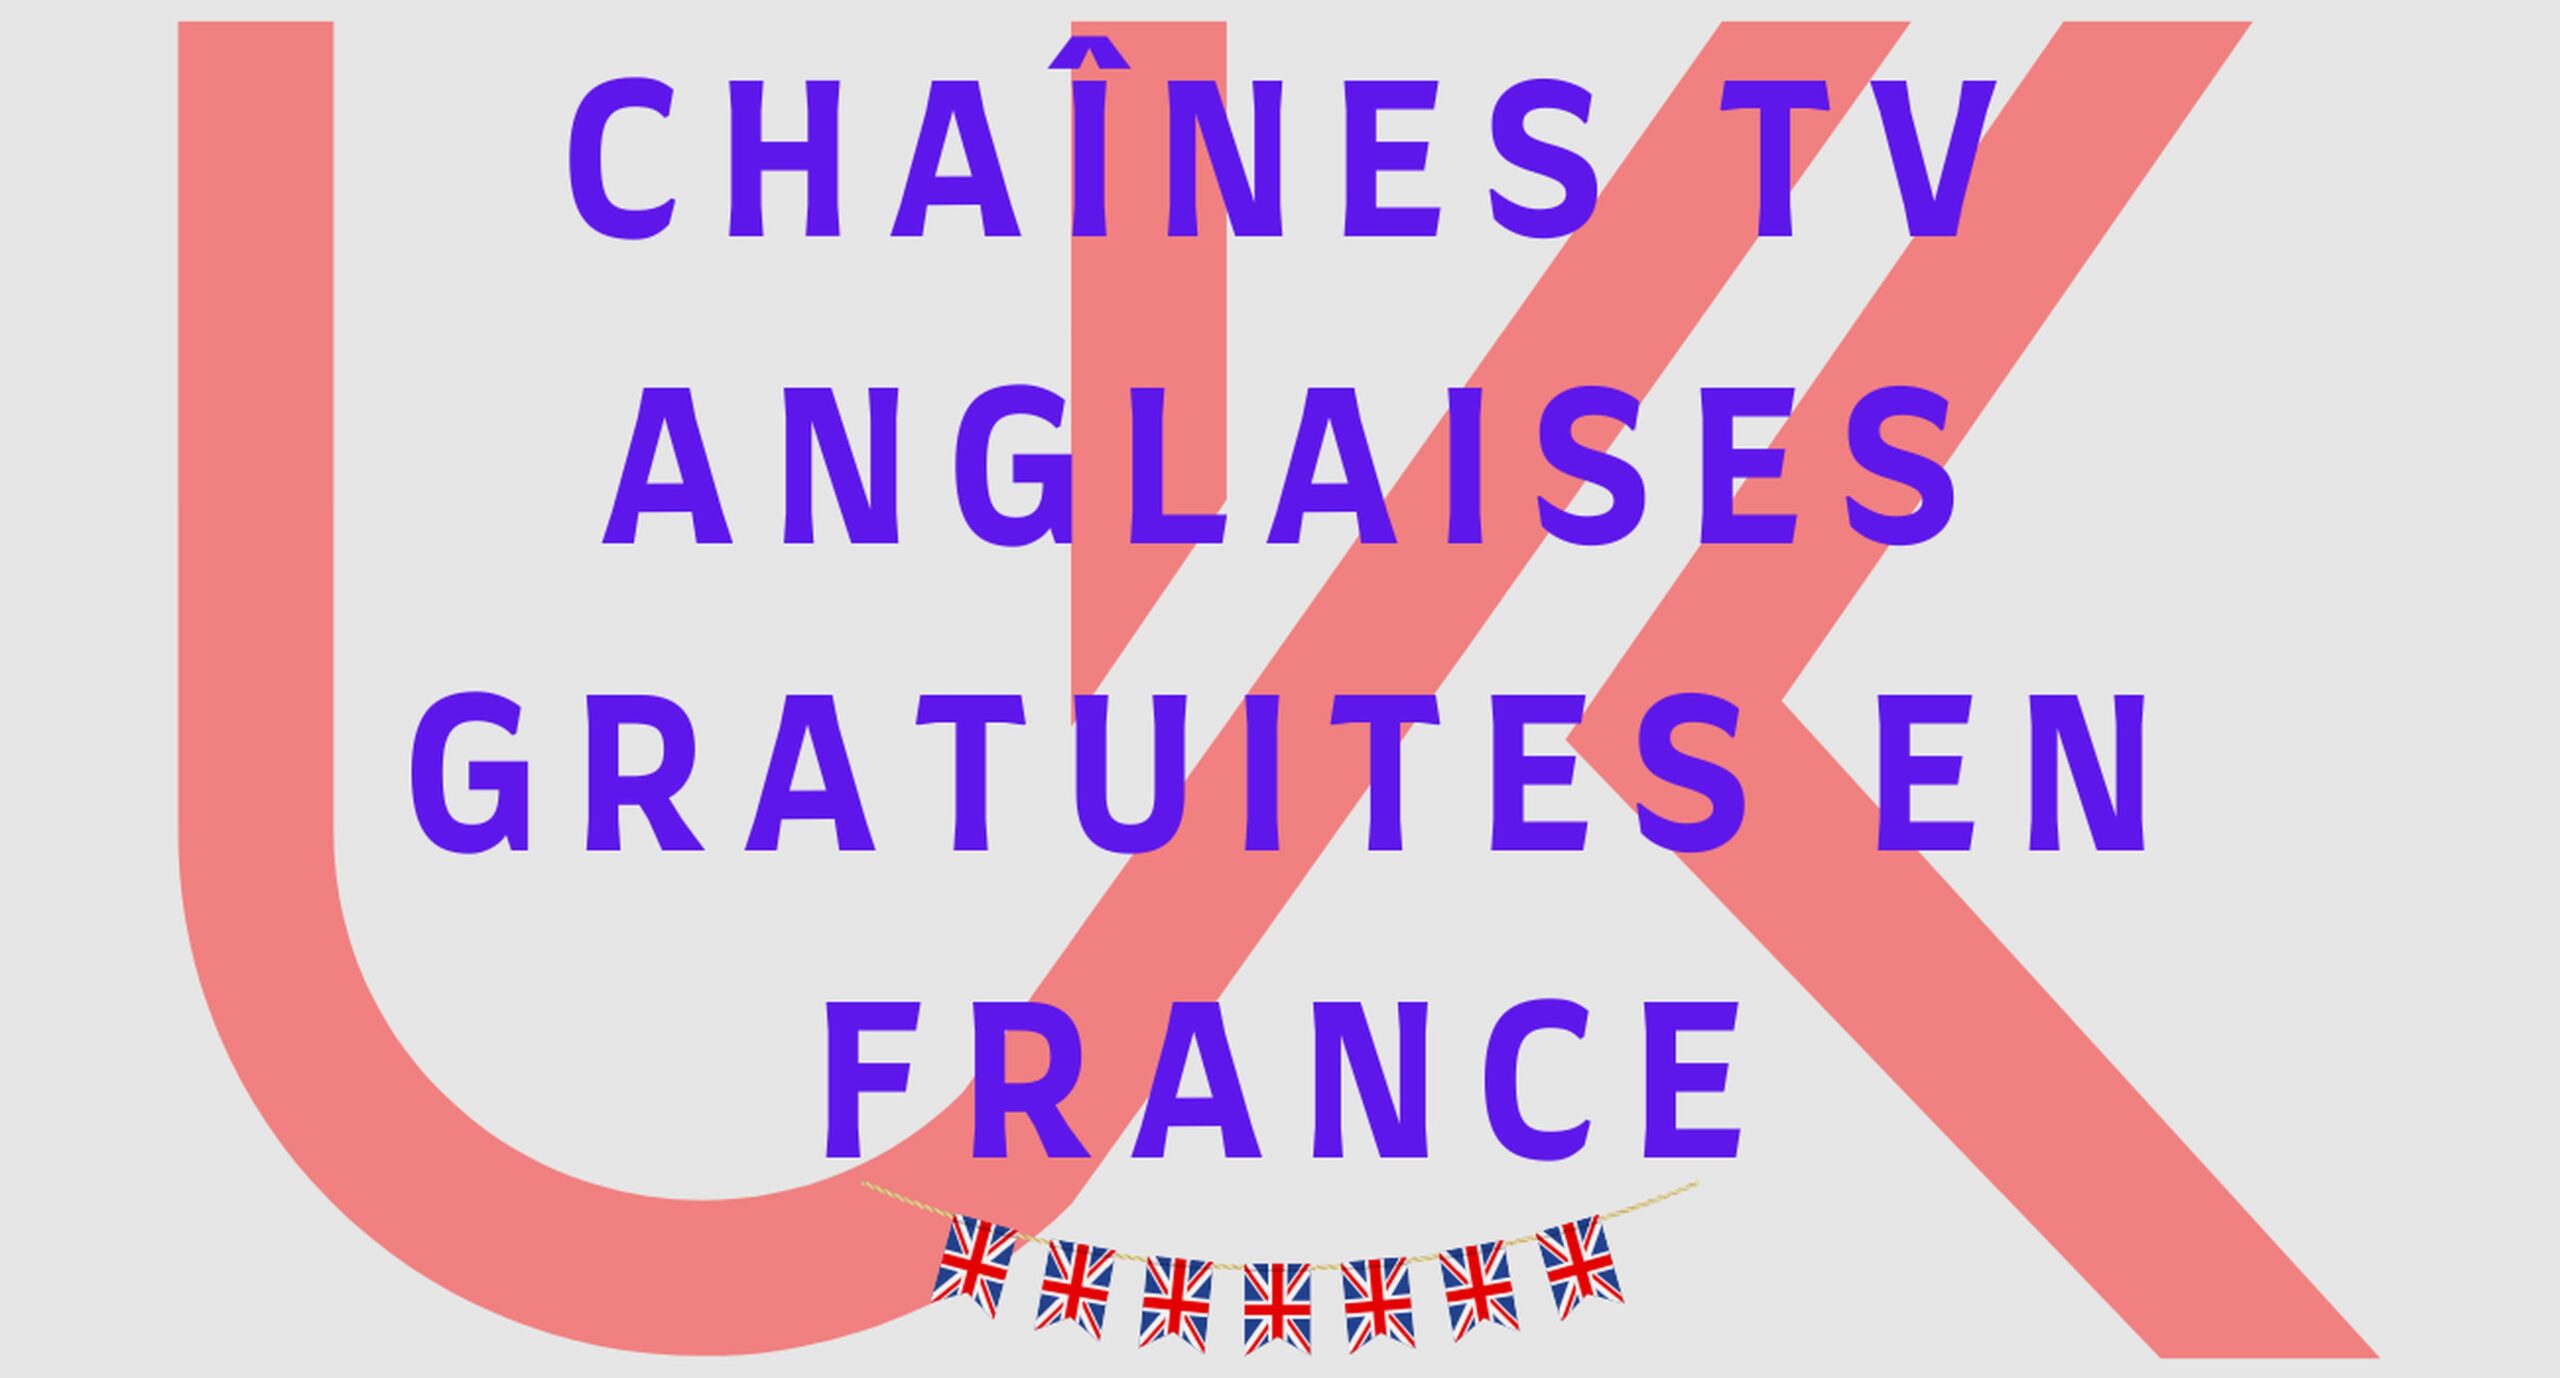 Chaînes TV Anglaises gratuites en France - 55 Chaînes TV disponibles 4